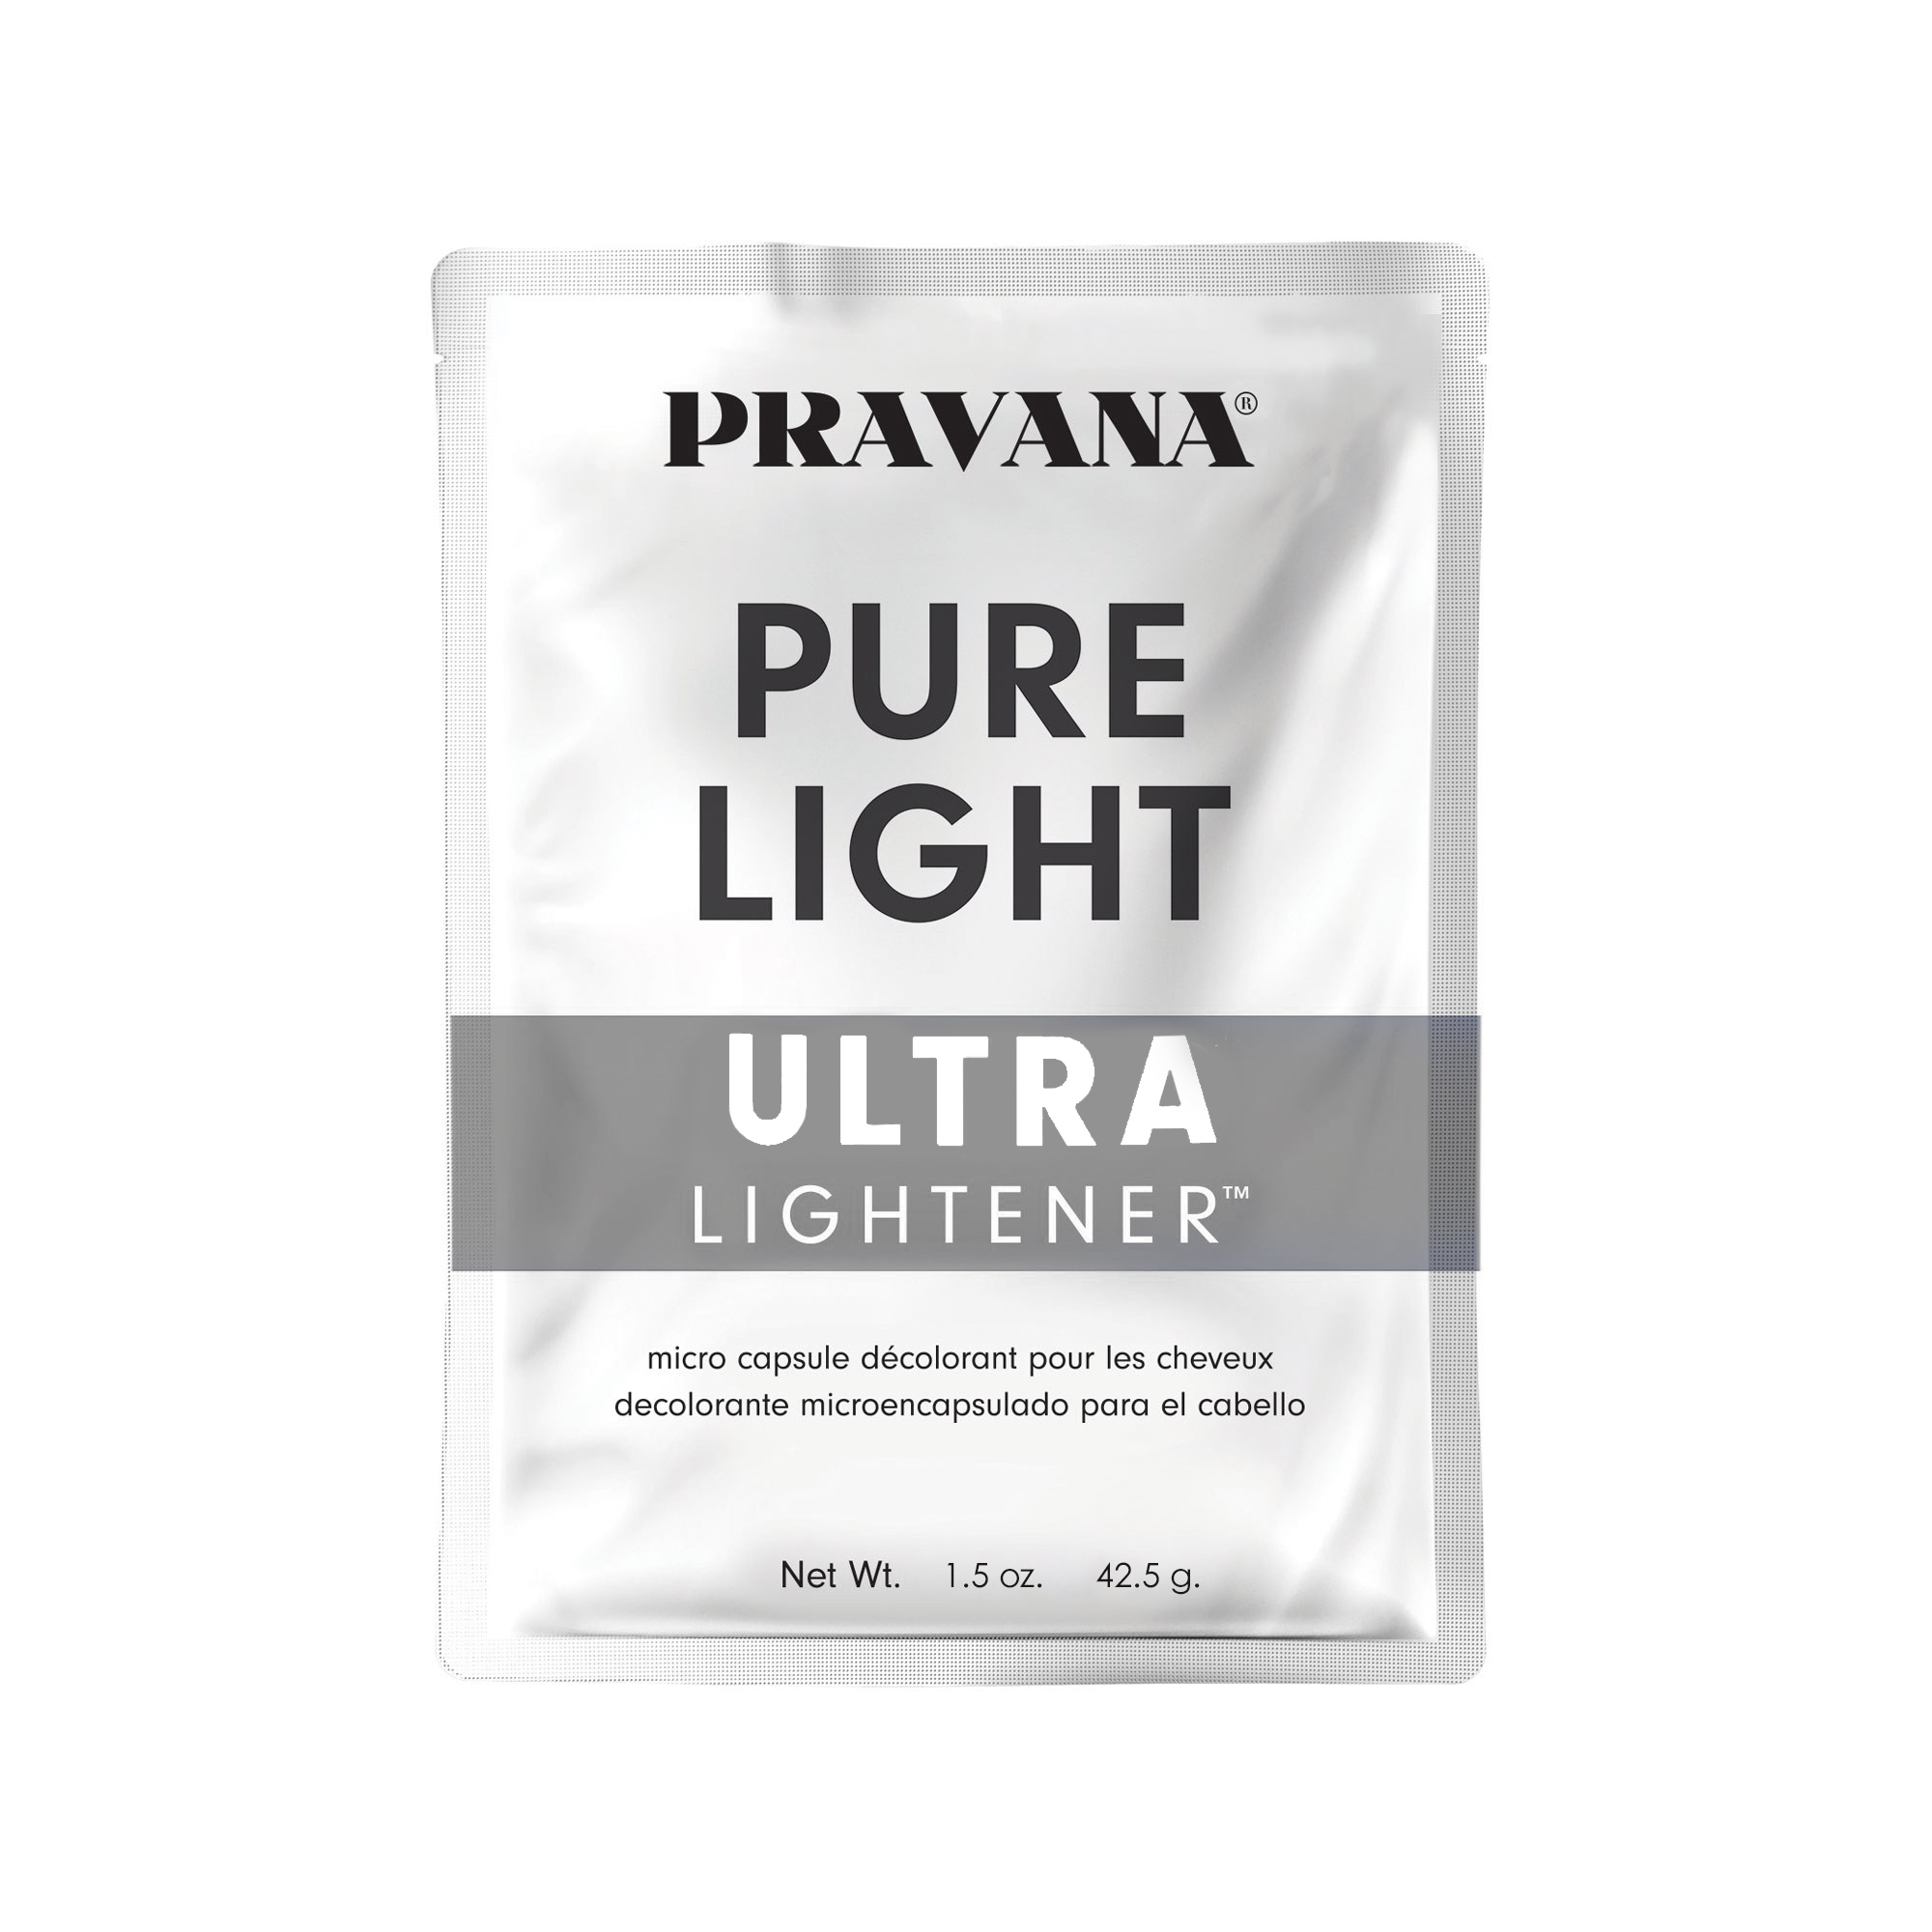 Pravana Pure Light Ultra Lightener